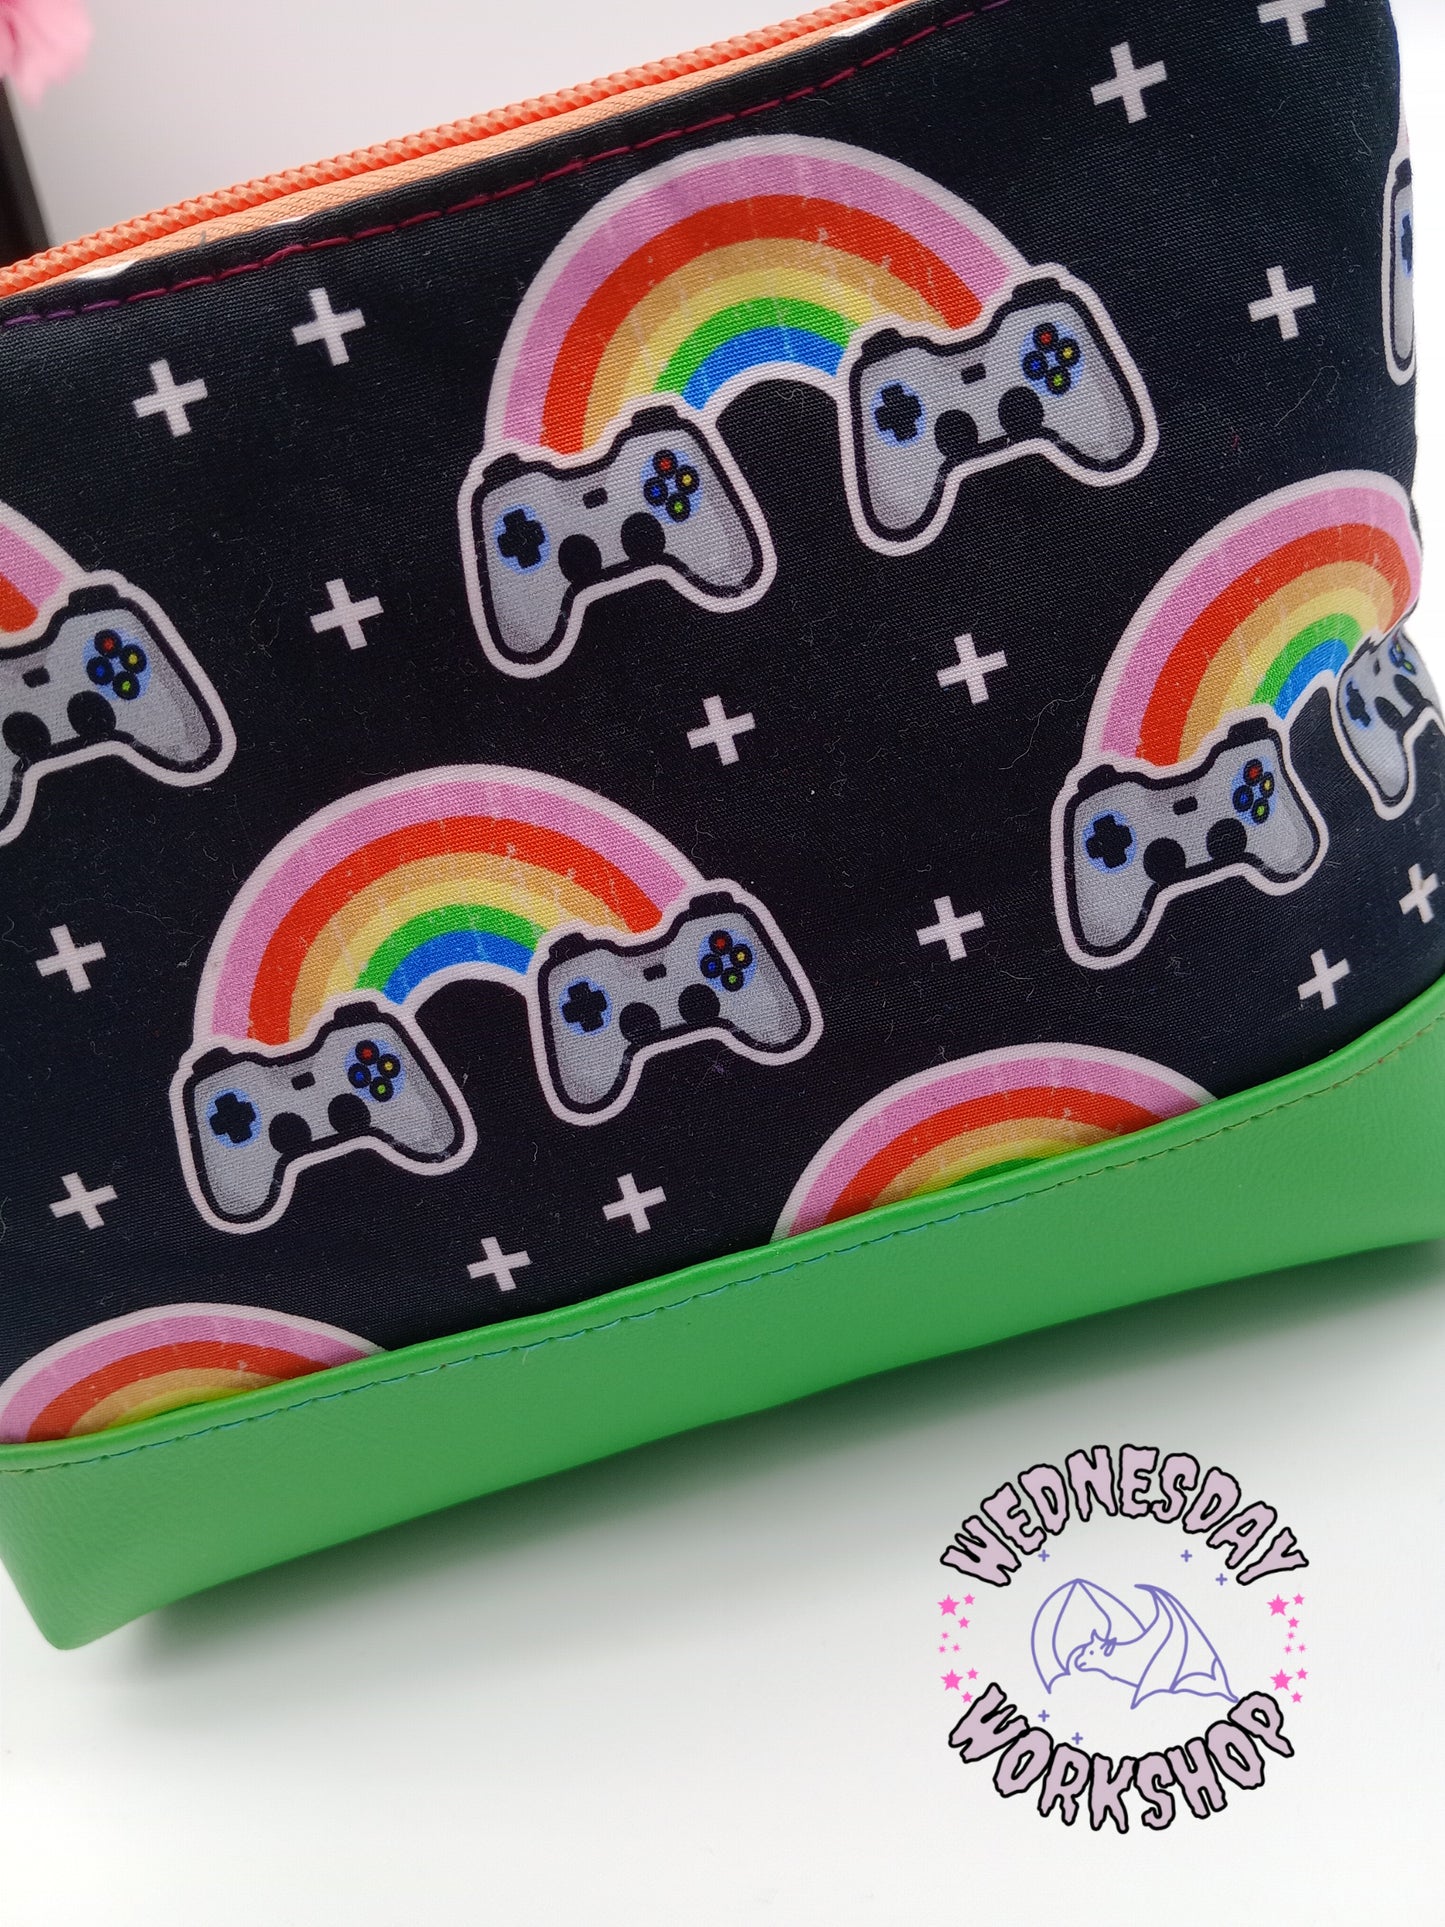 rainbow gaymers v. 3 boxy pouch